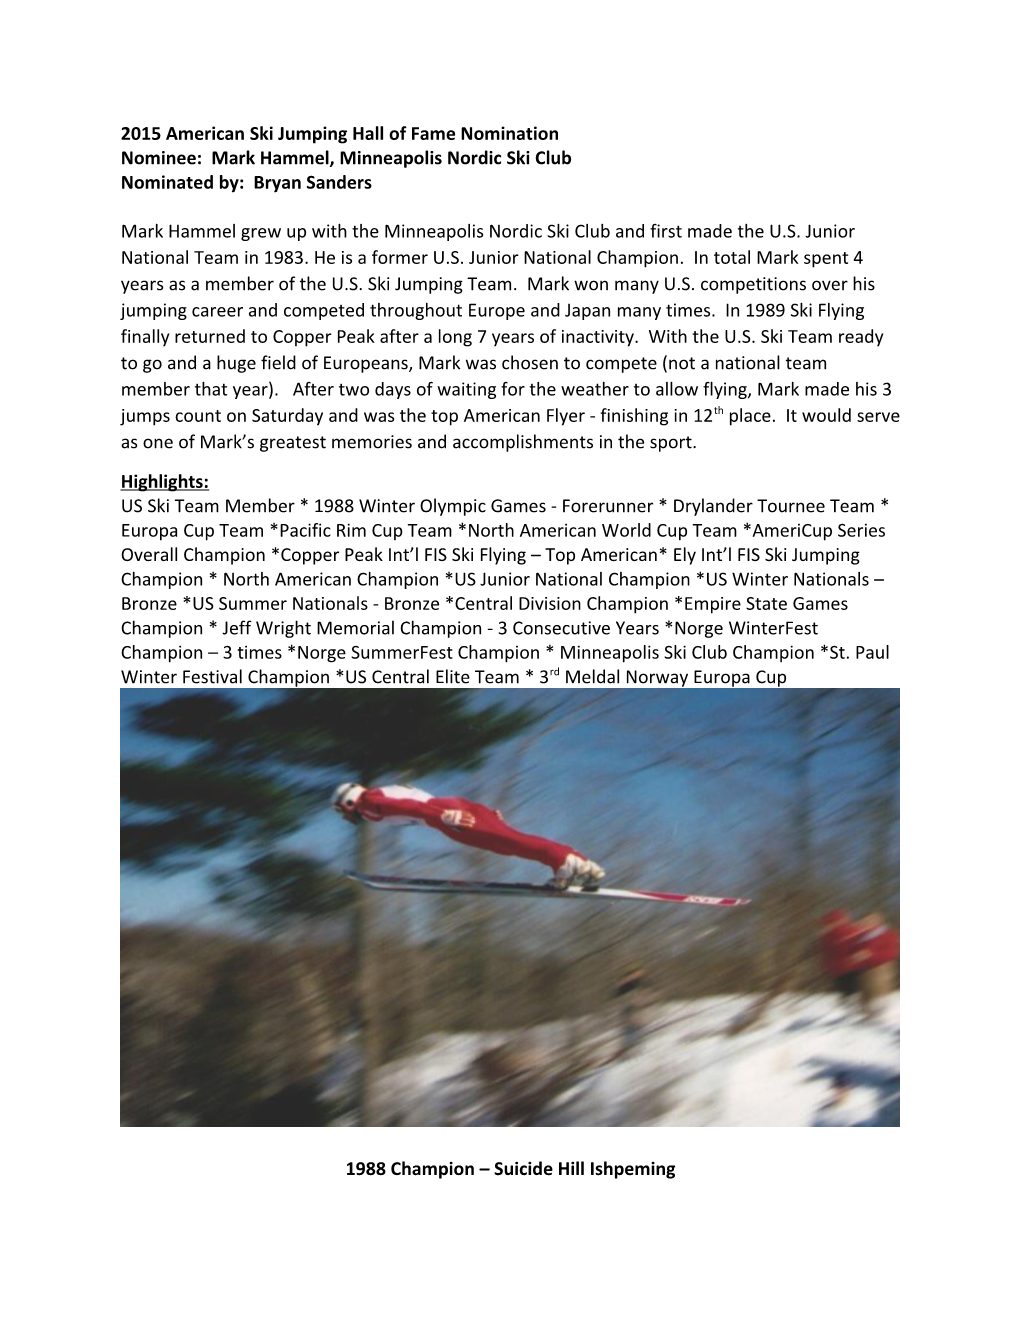 Mark Hammel, Minneapolis Nordic Ski Club Nominated By: Bryan Sanders